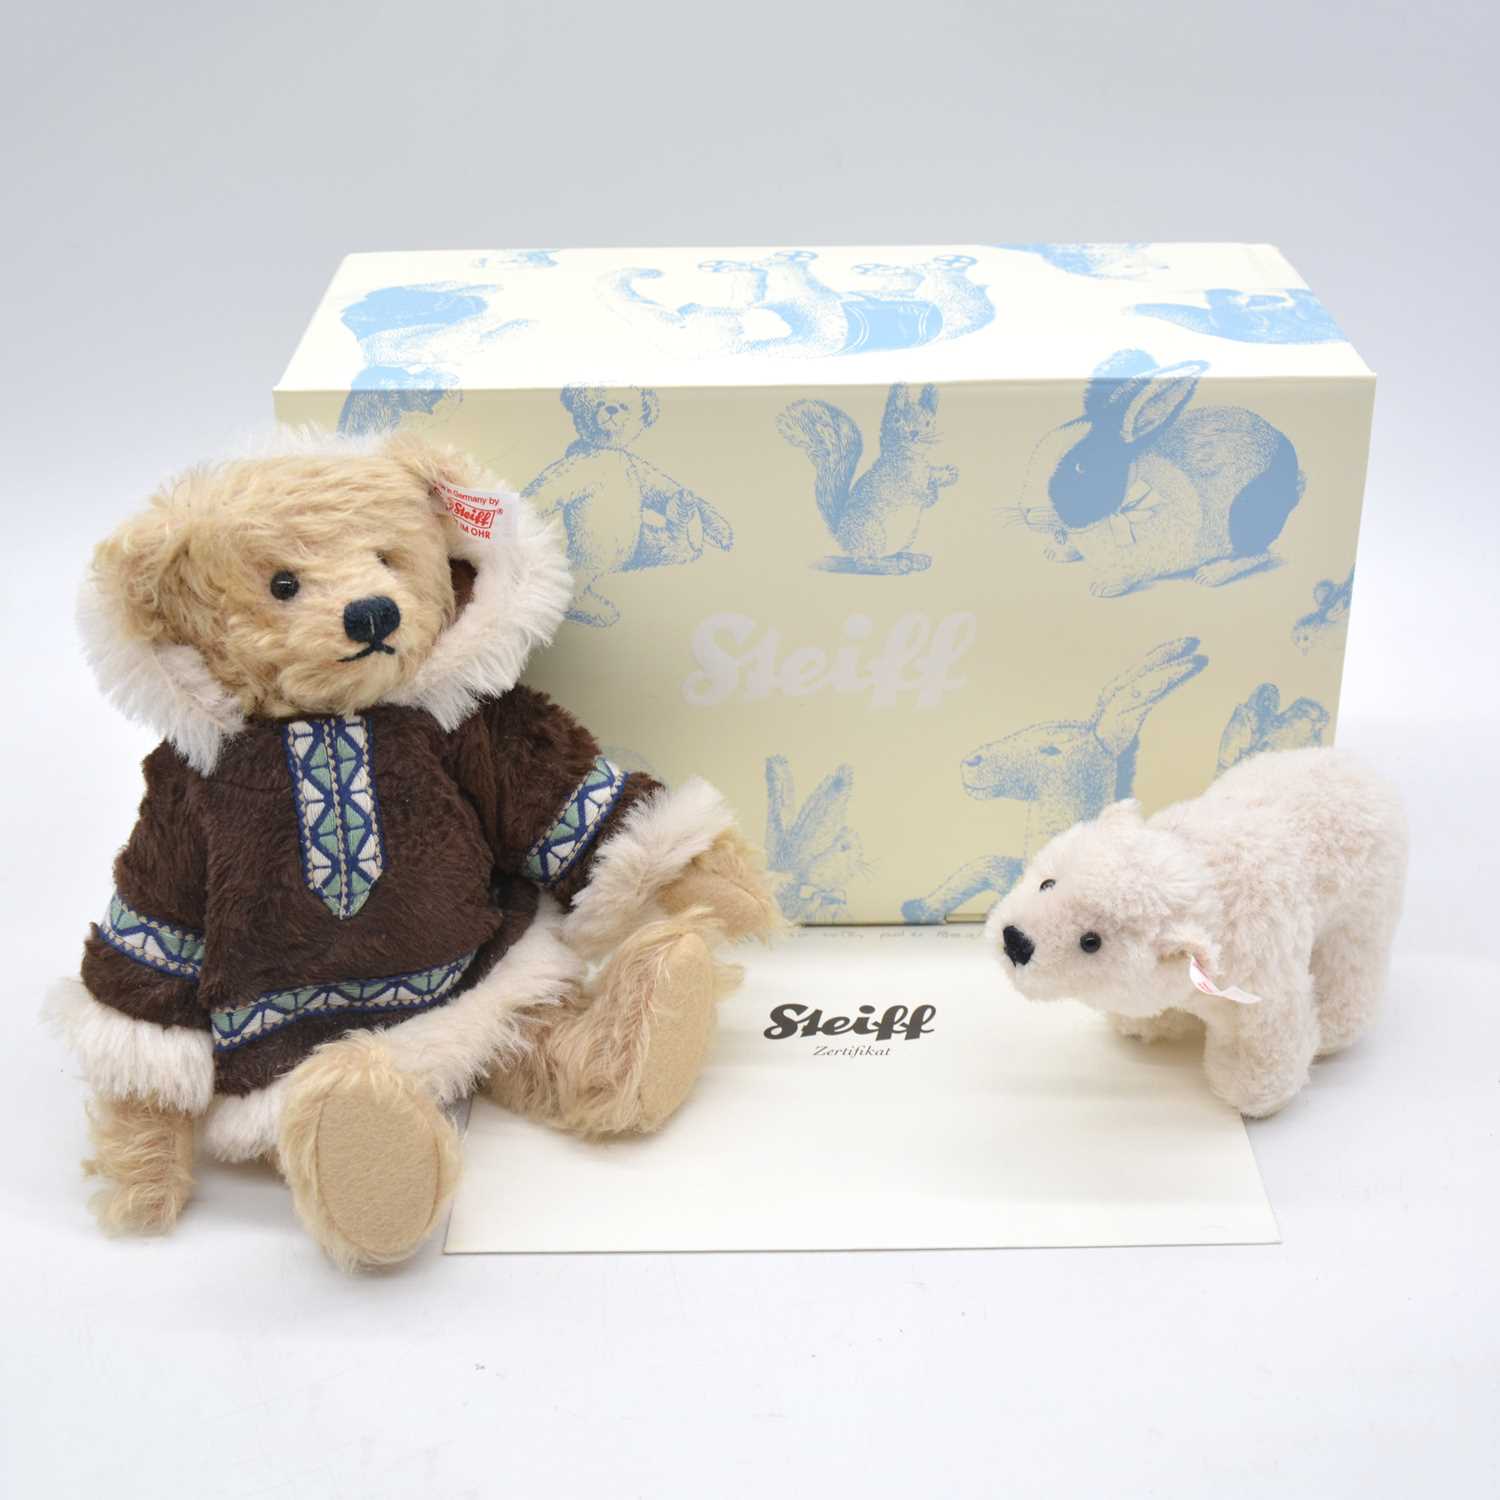 Steiff Germany teddy bears, 036019 'Eskimo mit Eisbar', boxed with certificate